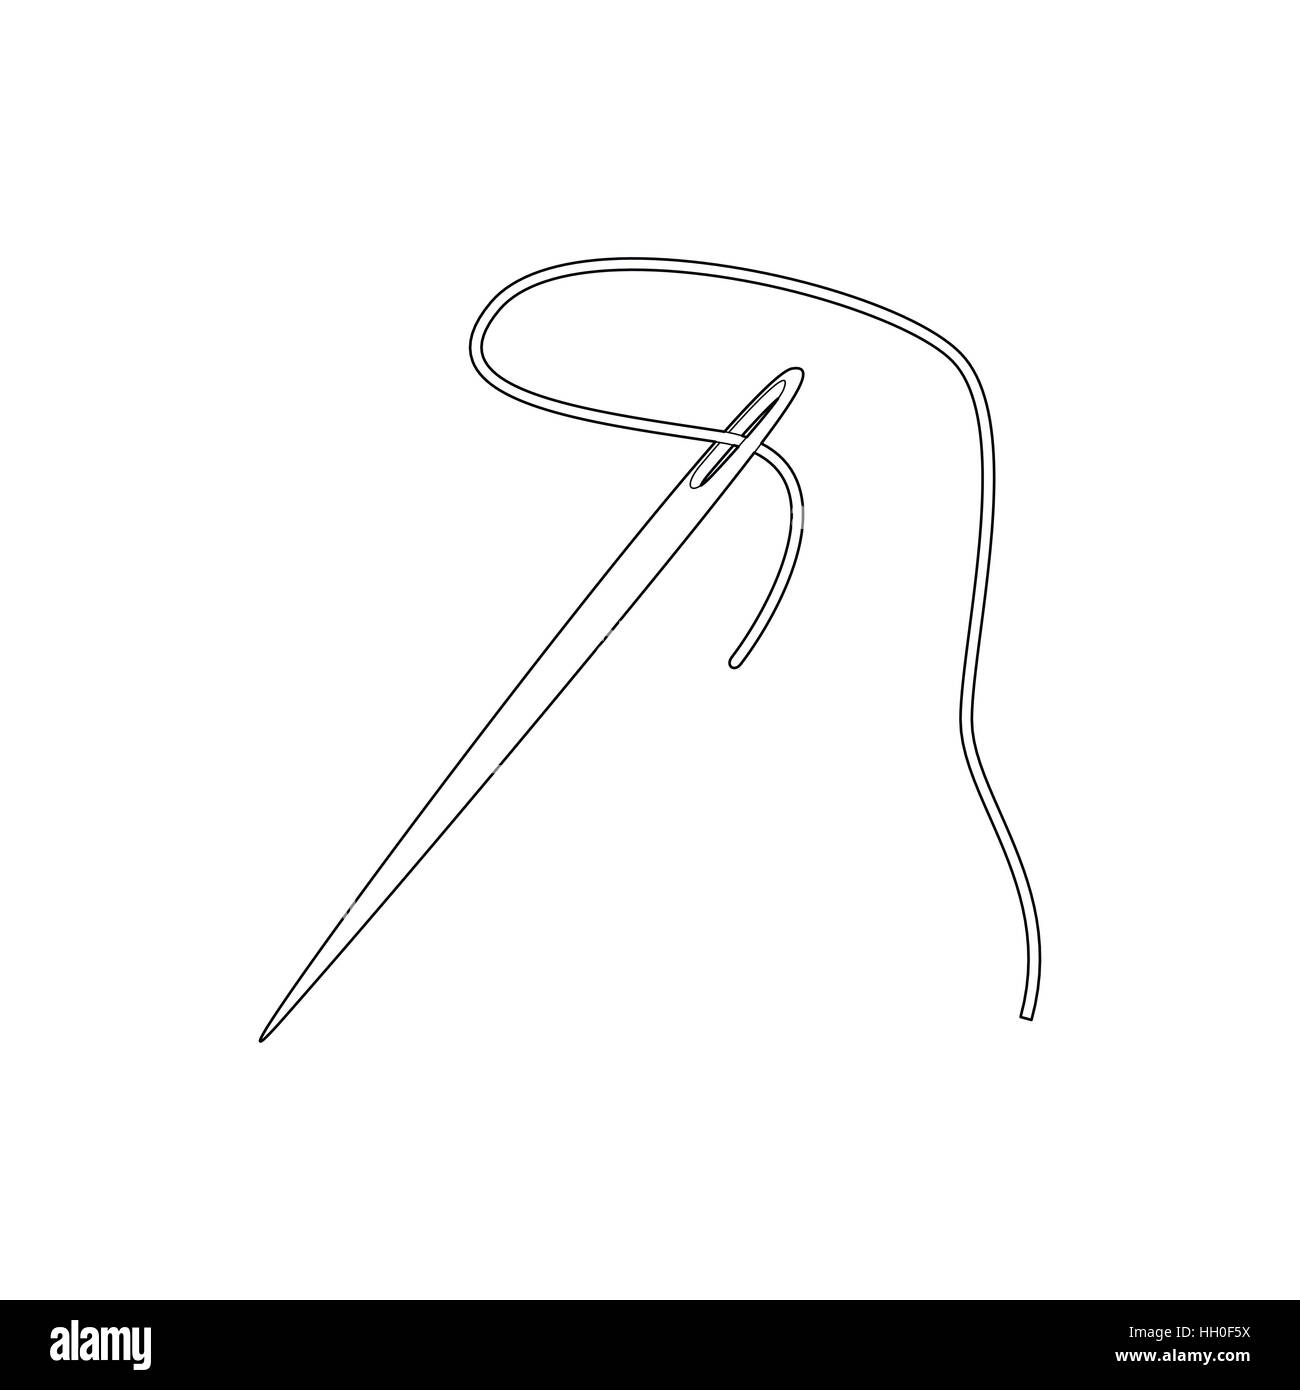 Nadel und Faden Symbol, Umriss-Stil Stock-Vektorgrafik - Alamy